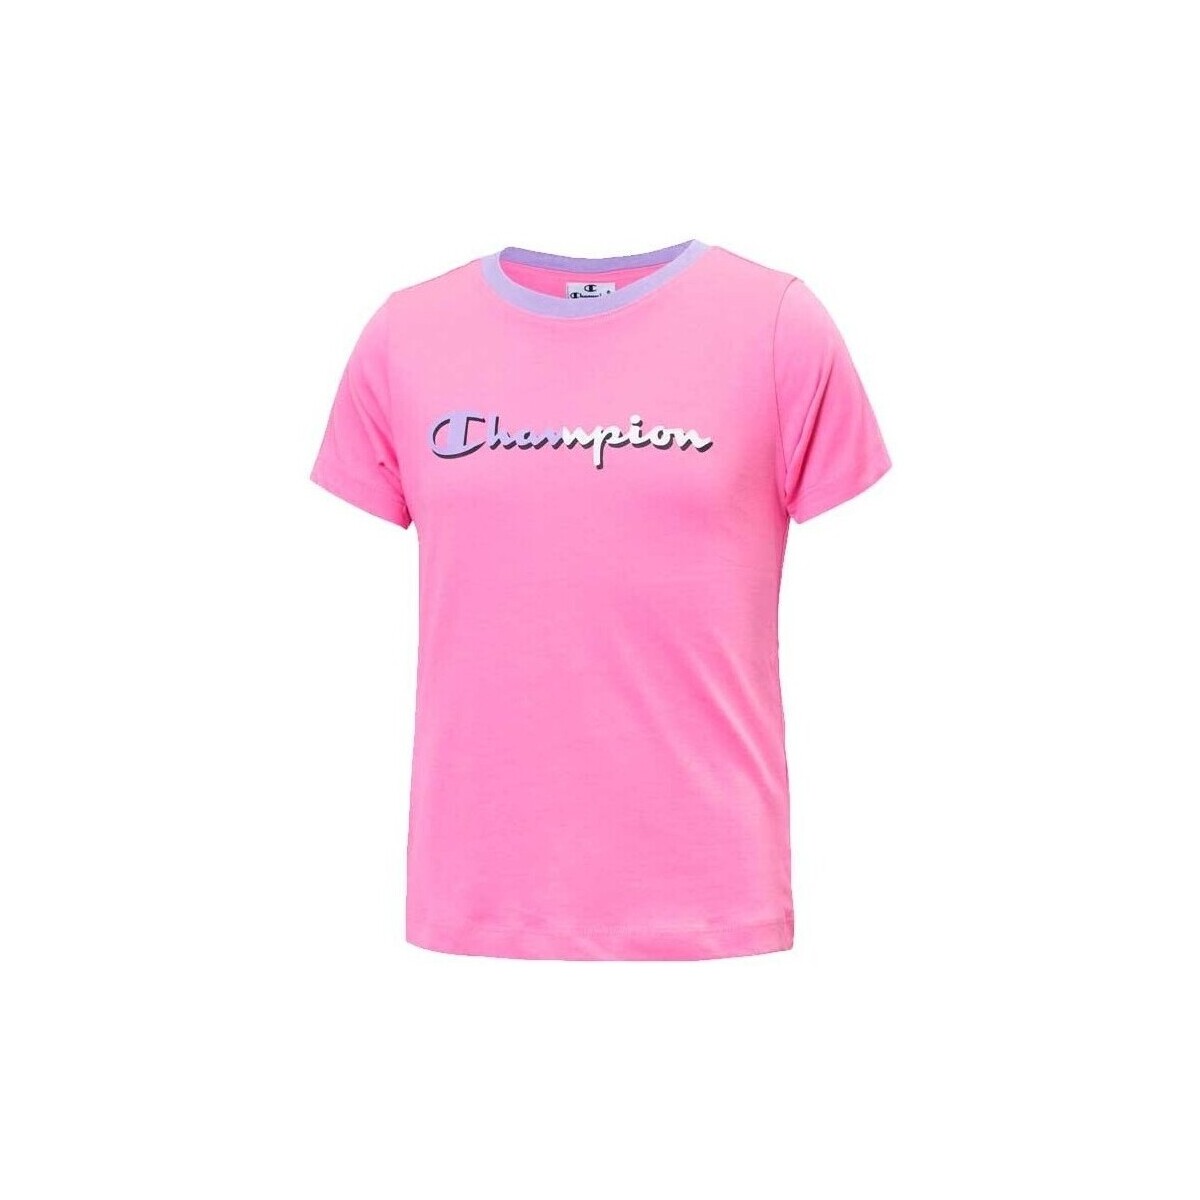 textil Niños Camisetas manga corta Champion 404670 PS074 Rosa